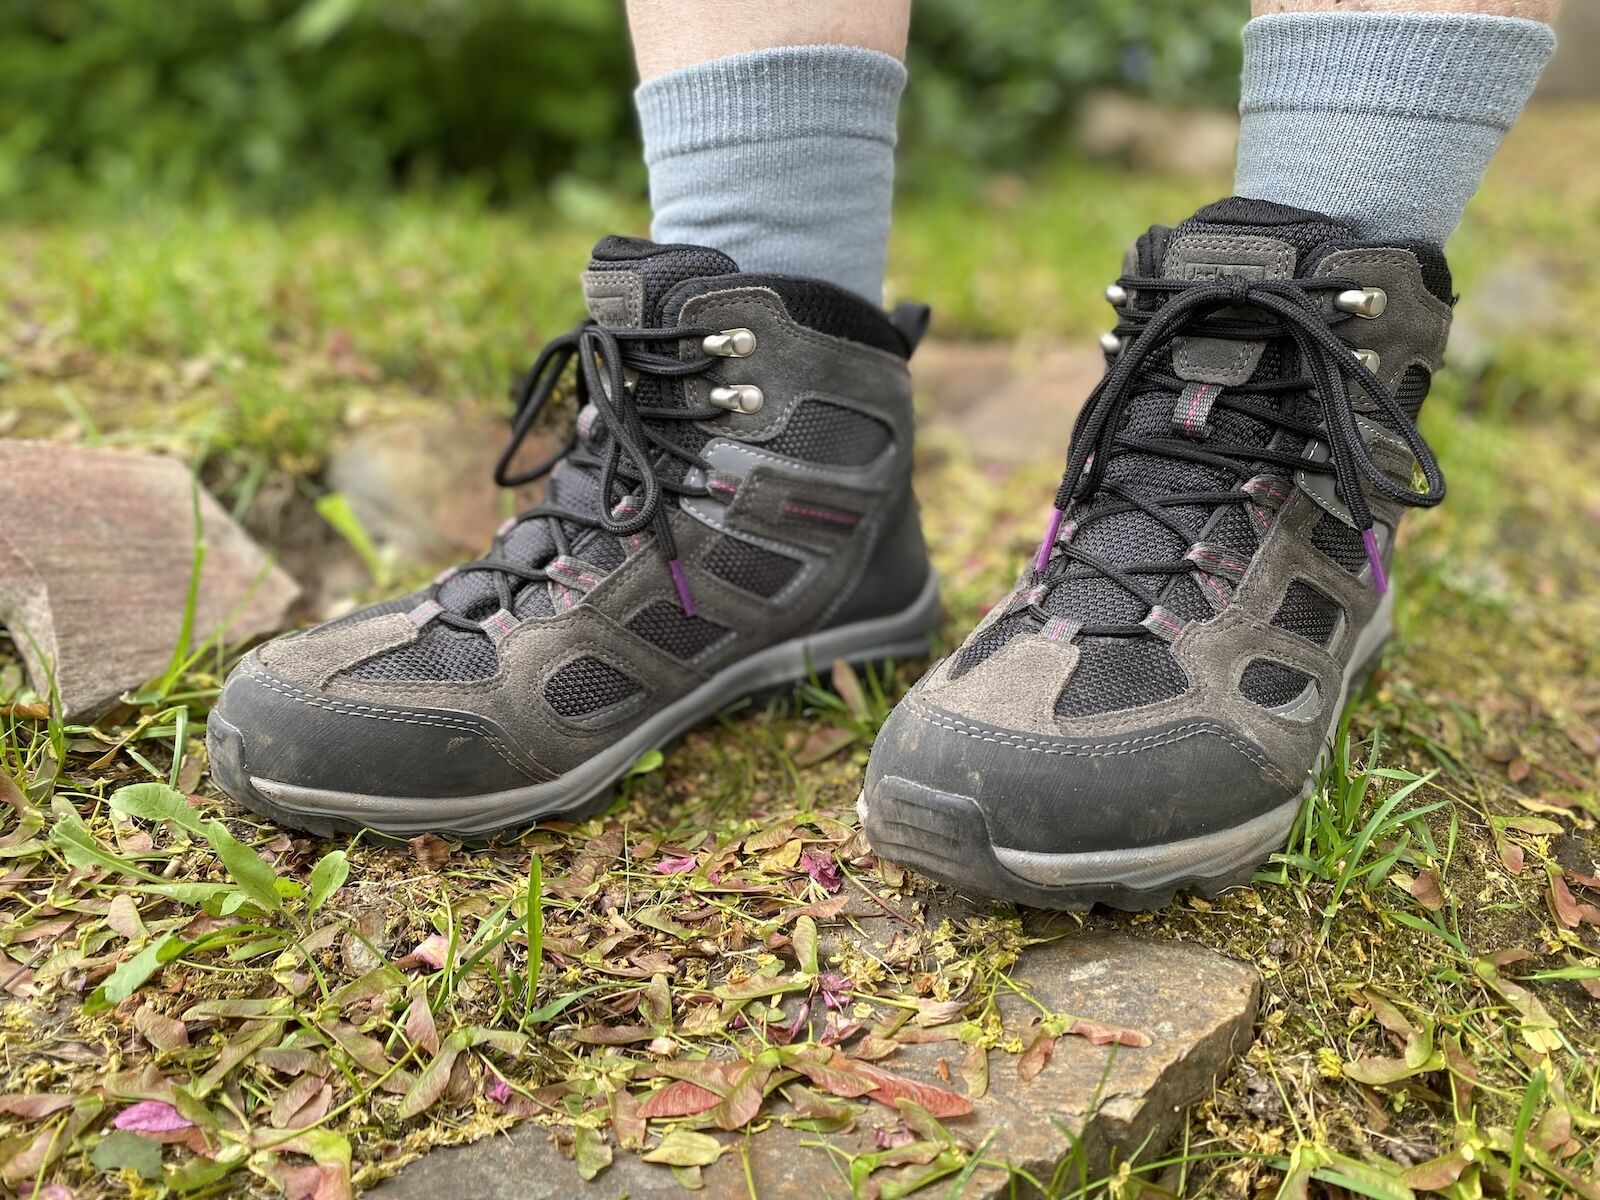 Jack Wolfskin’s Vojo 3 Texapore Mid W hiking boots